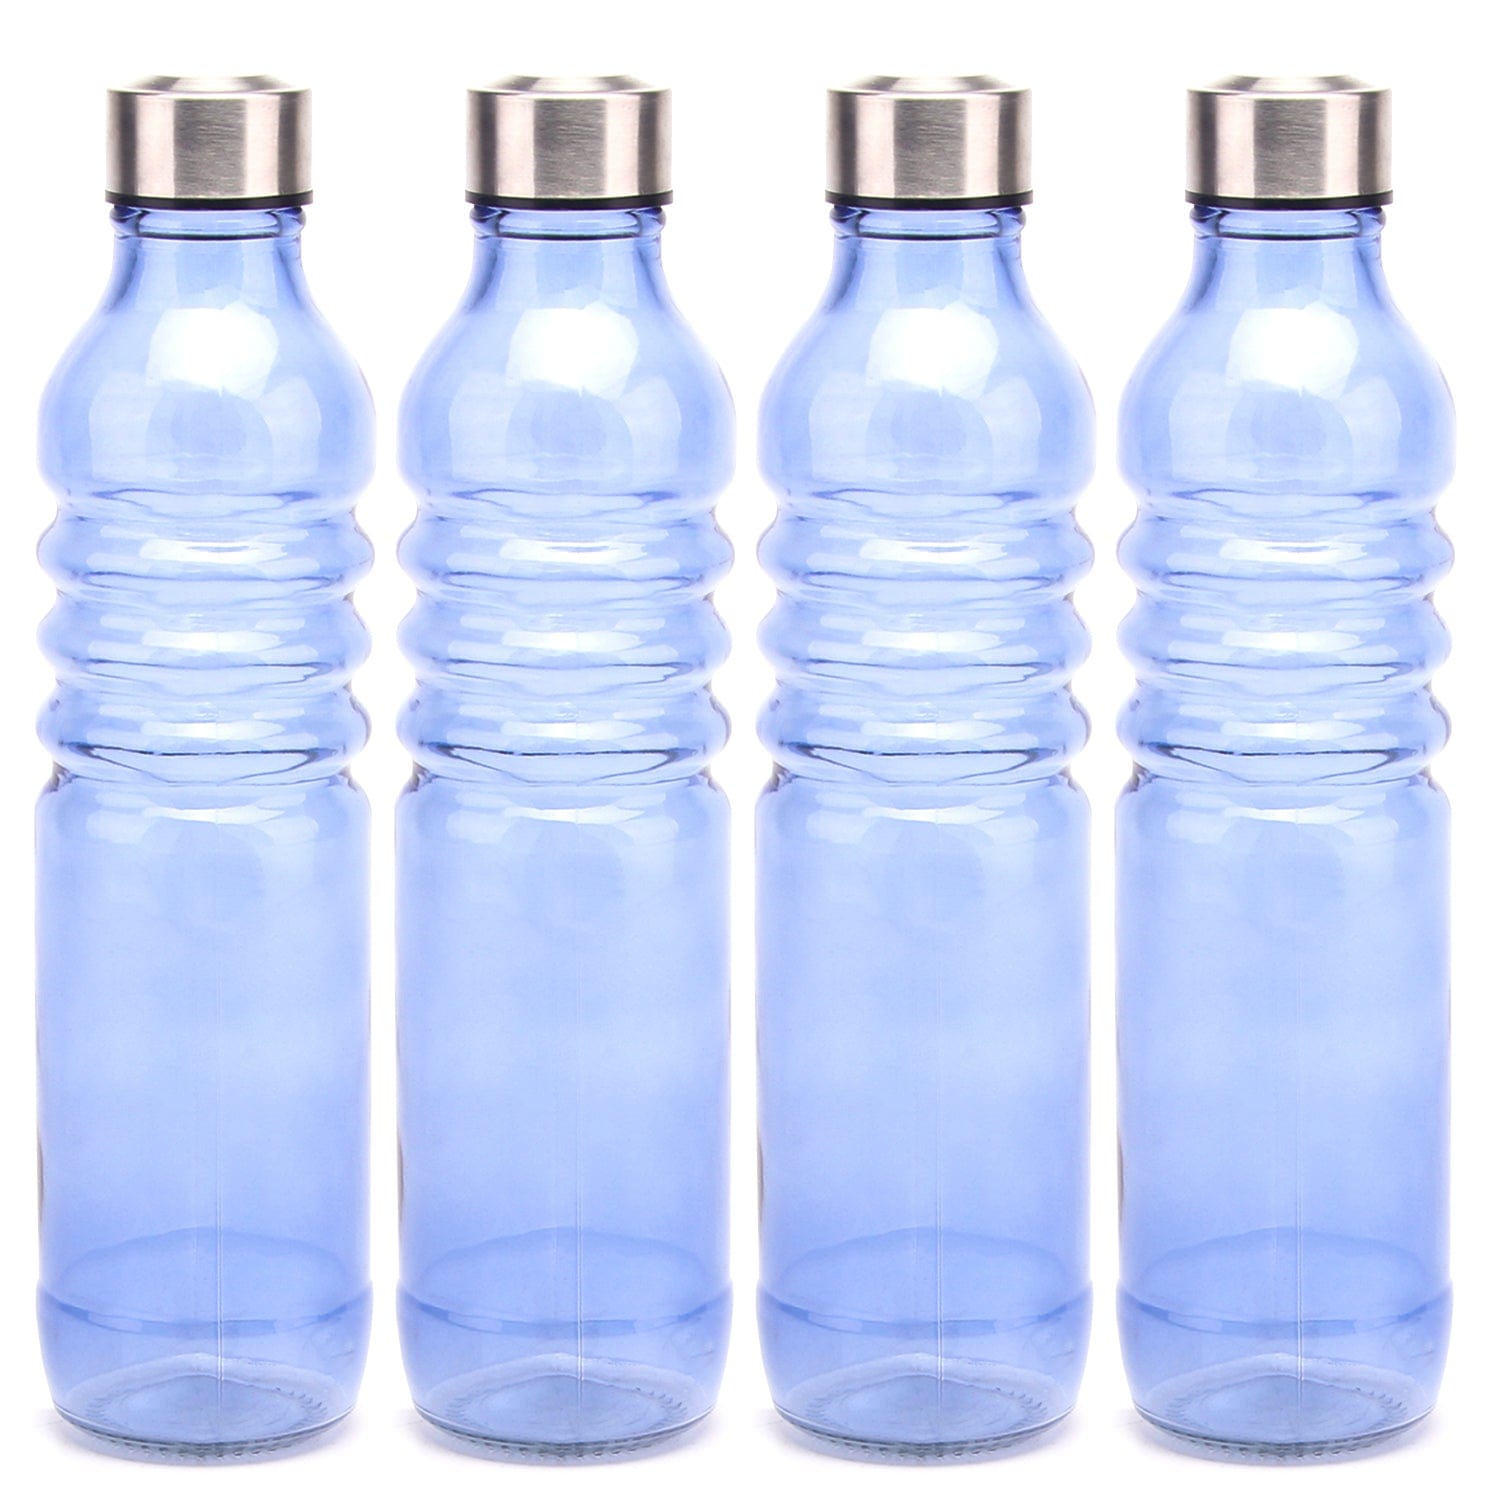 Red Butler Bottles Coloured Glass Bottle 750ml | 4pcs Set | Blue QGBT75A3 Redbutler